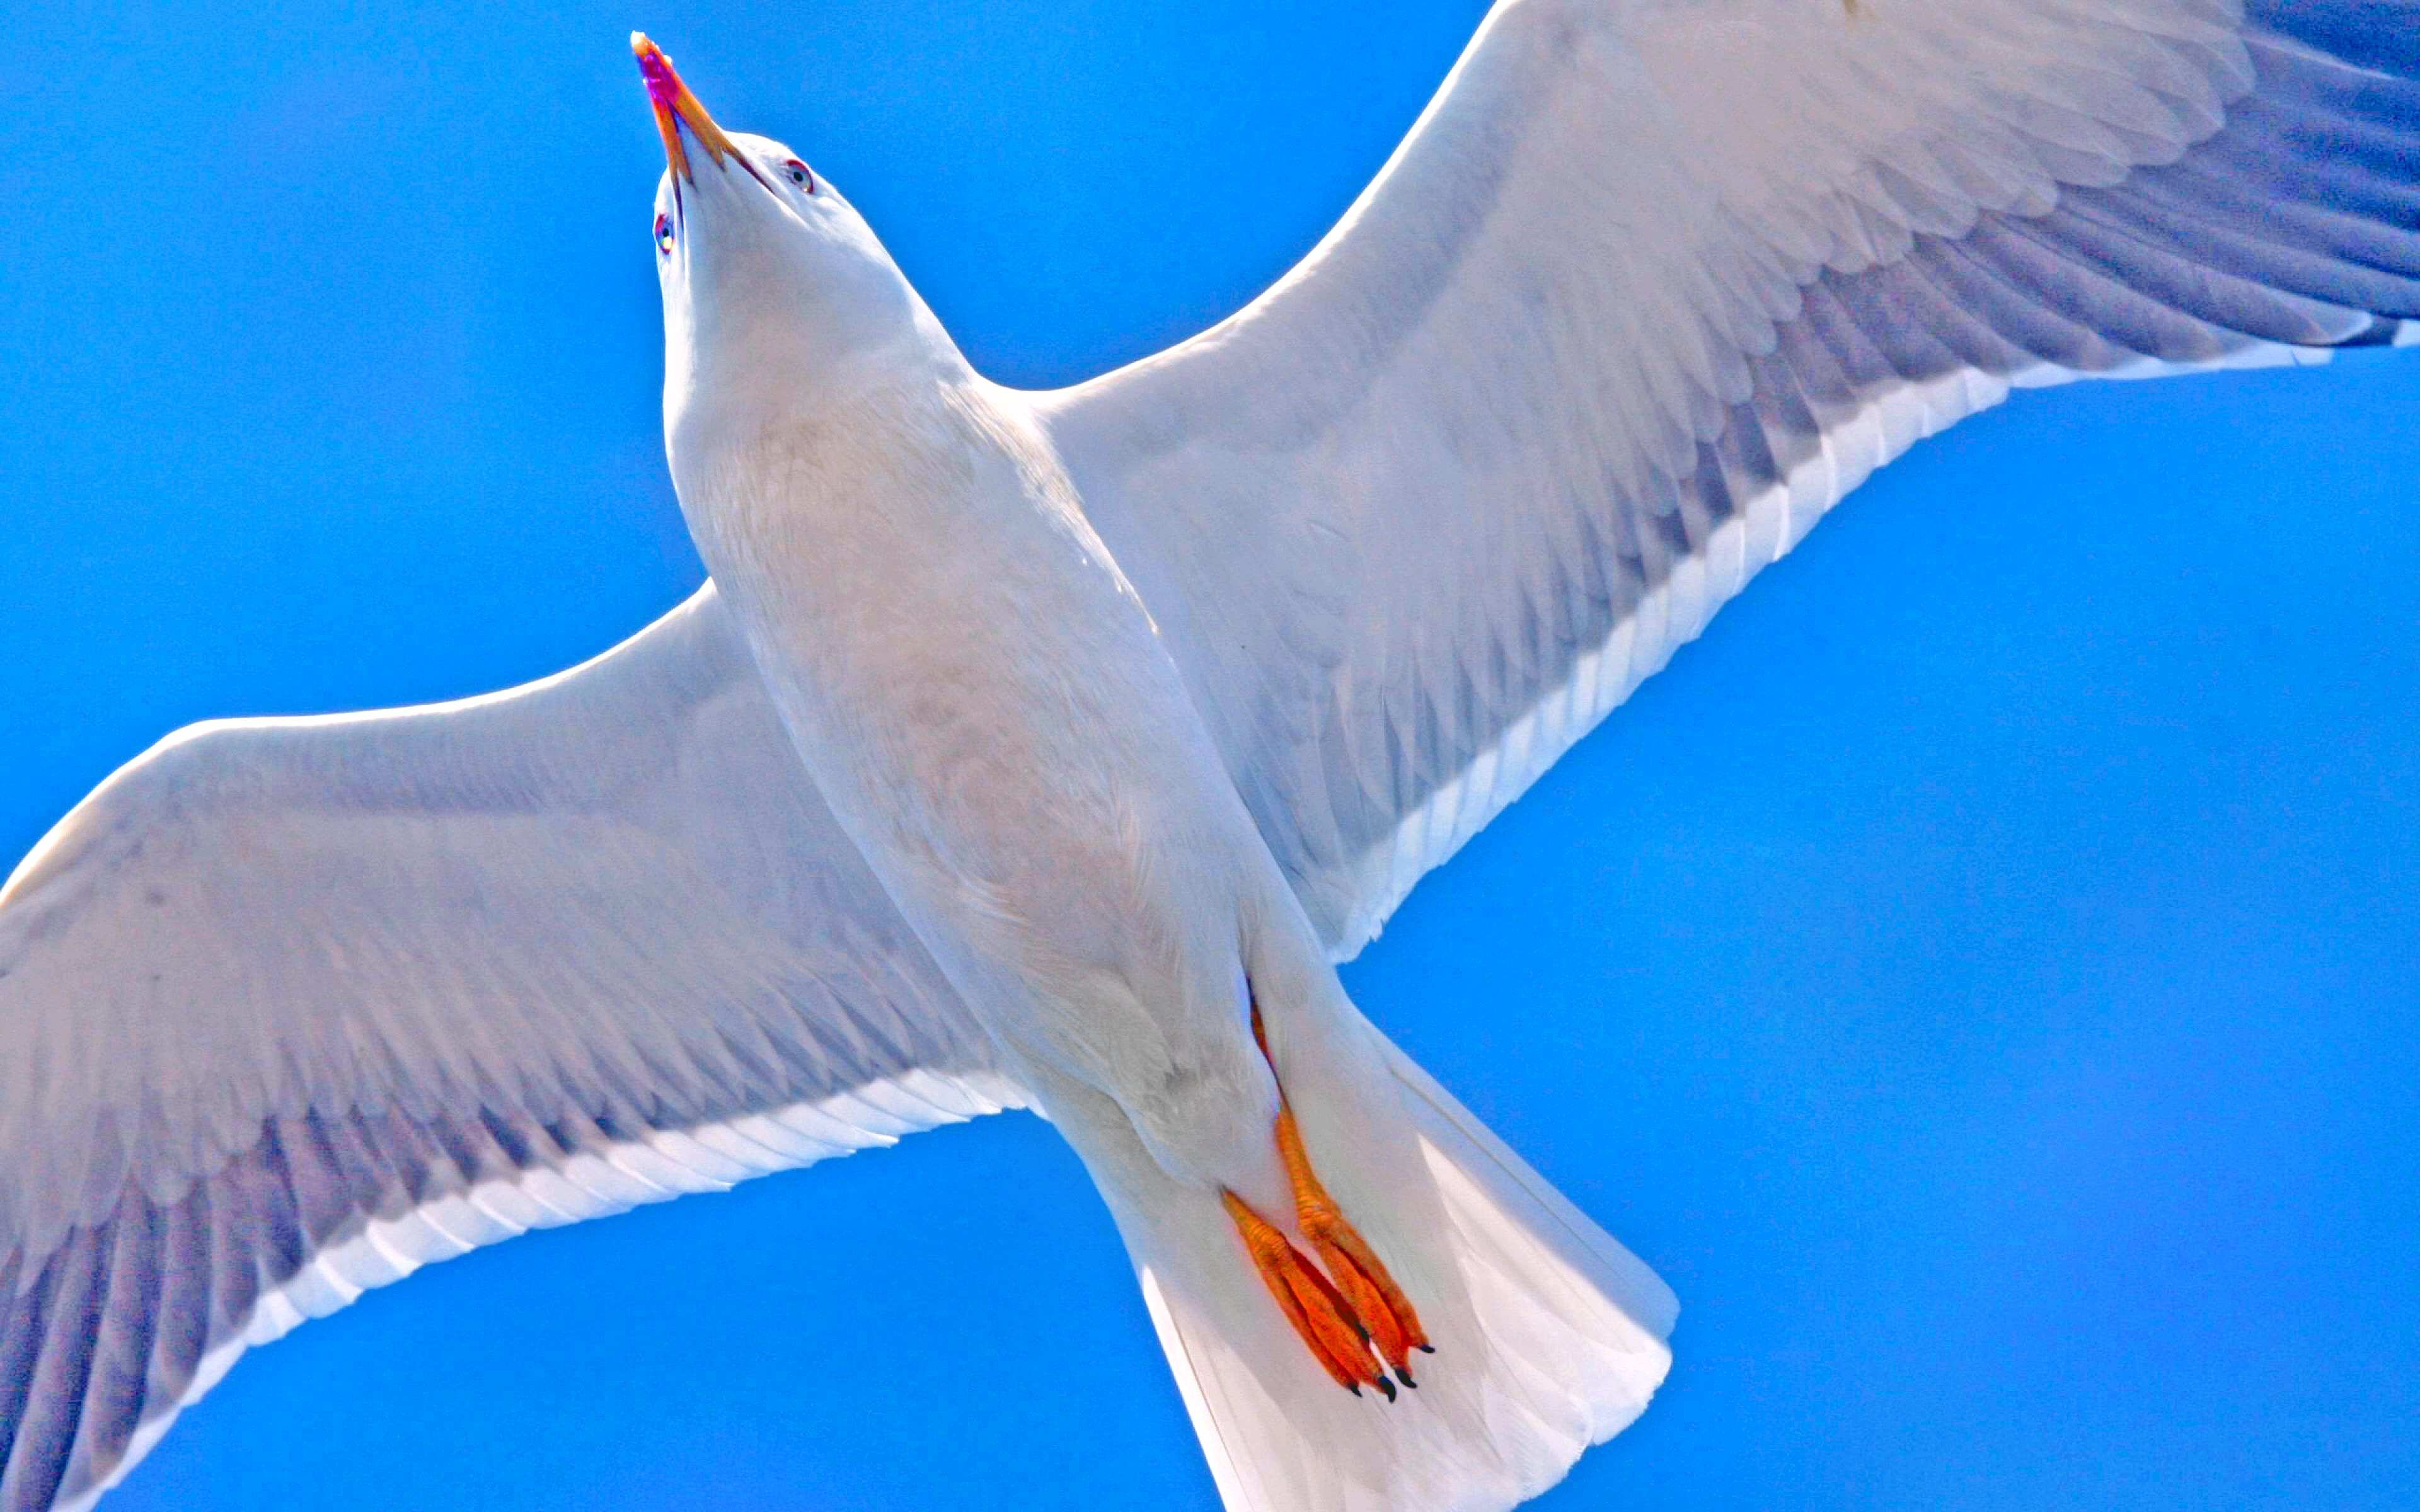 356155 descargar imagen animales, gaviota, ave, azul, vuelo, soleado, aves: fondos de pantalla y protectores de pantalla gratis